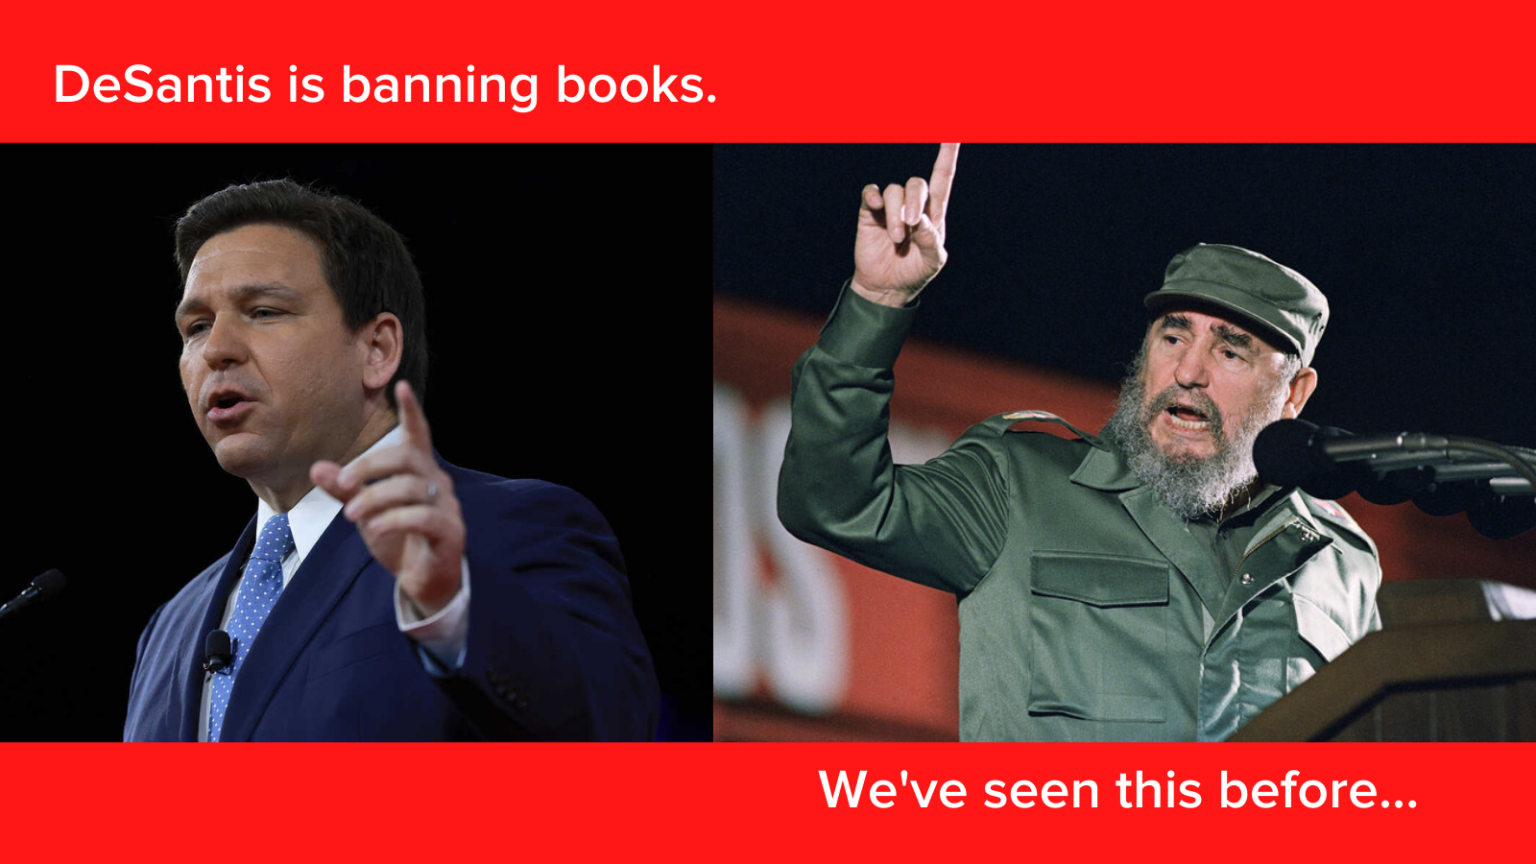 DeSantis مثل كاسترو يحظر الكتب